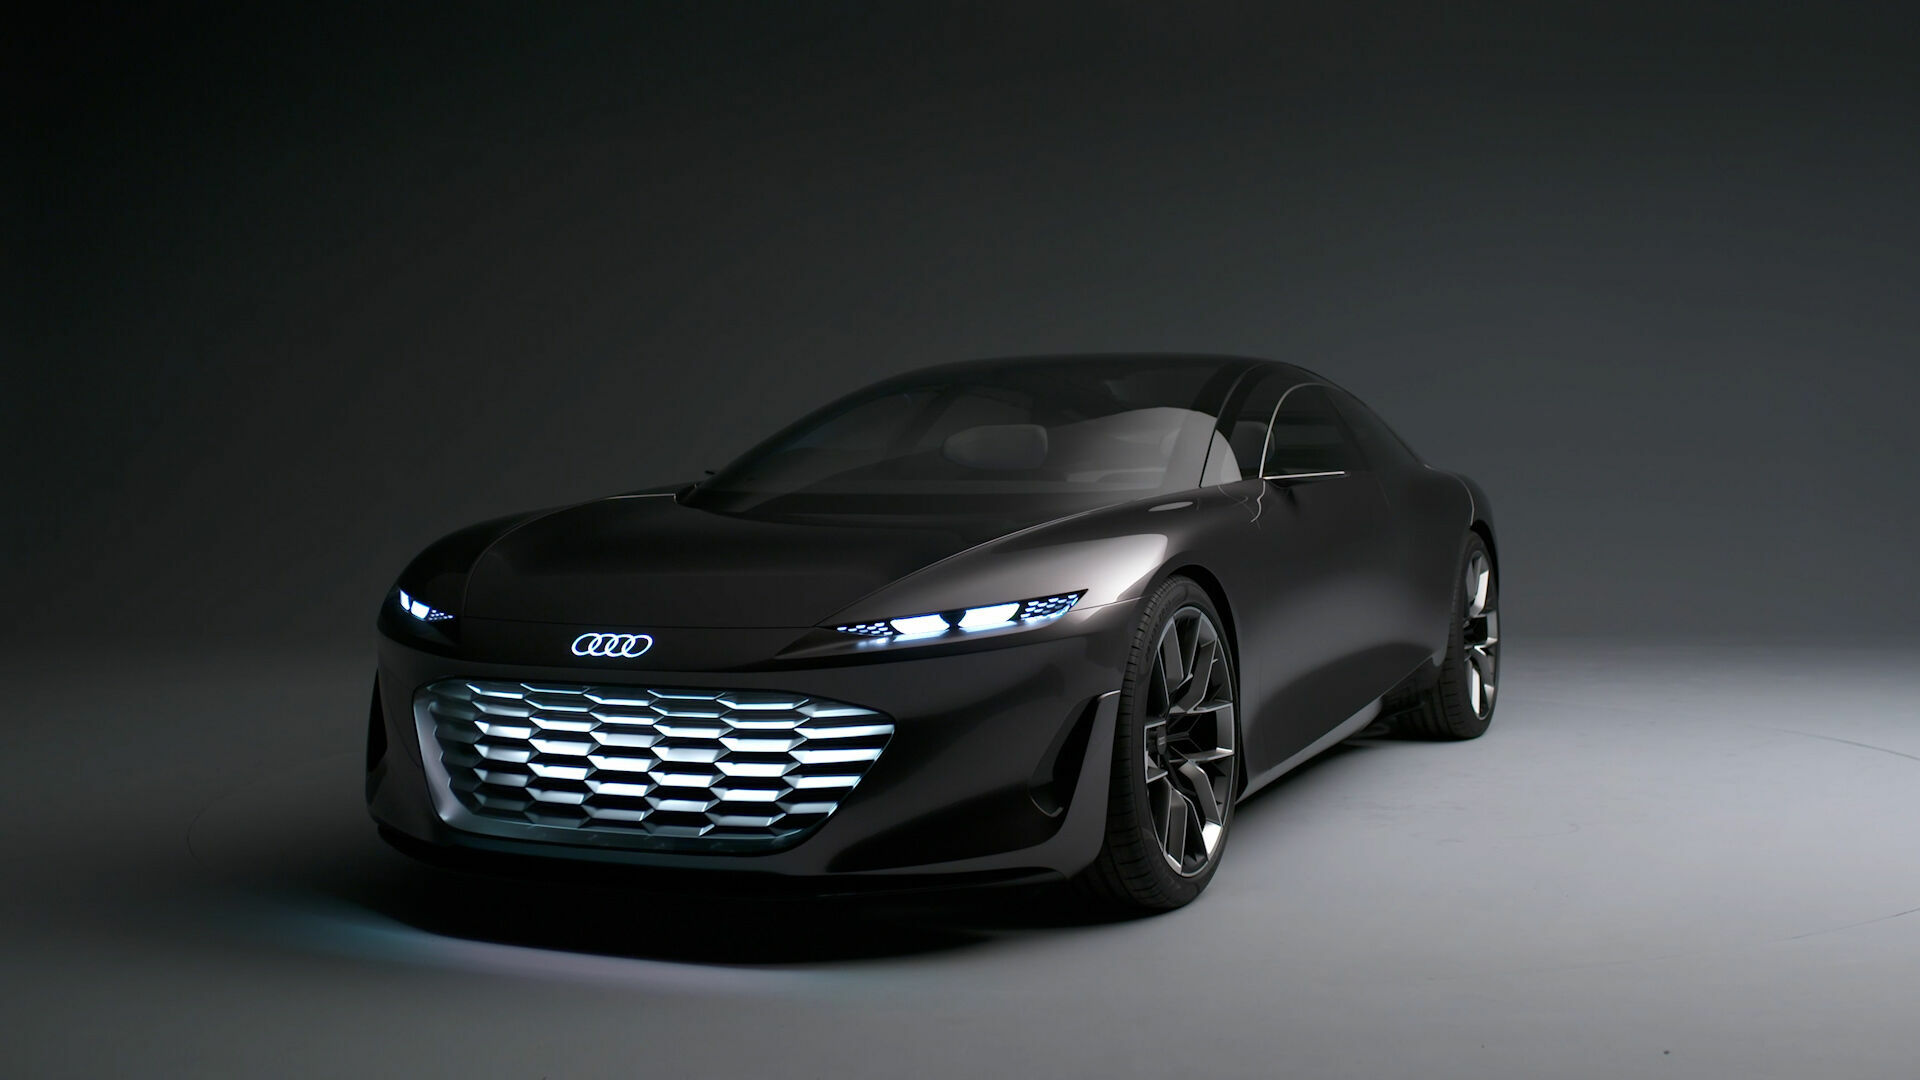 Footage: Audi grandsphere concept